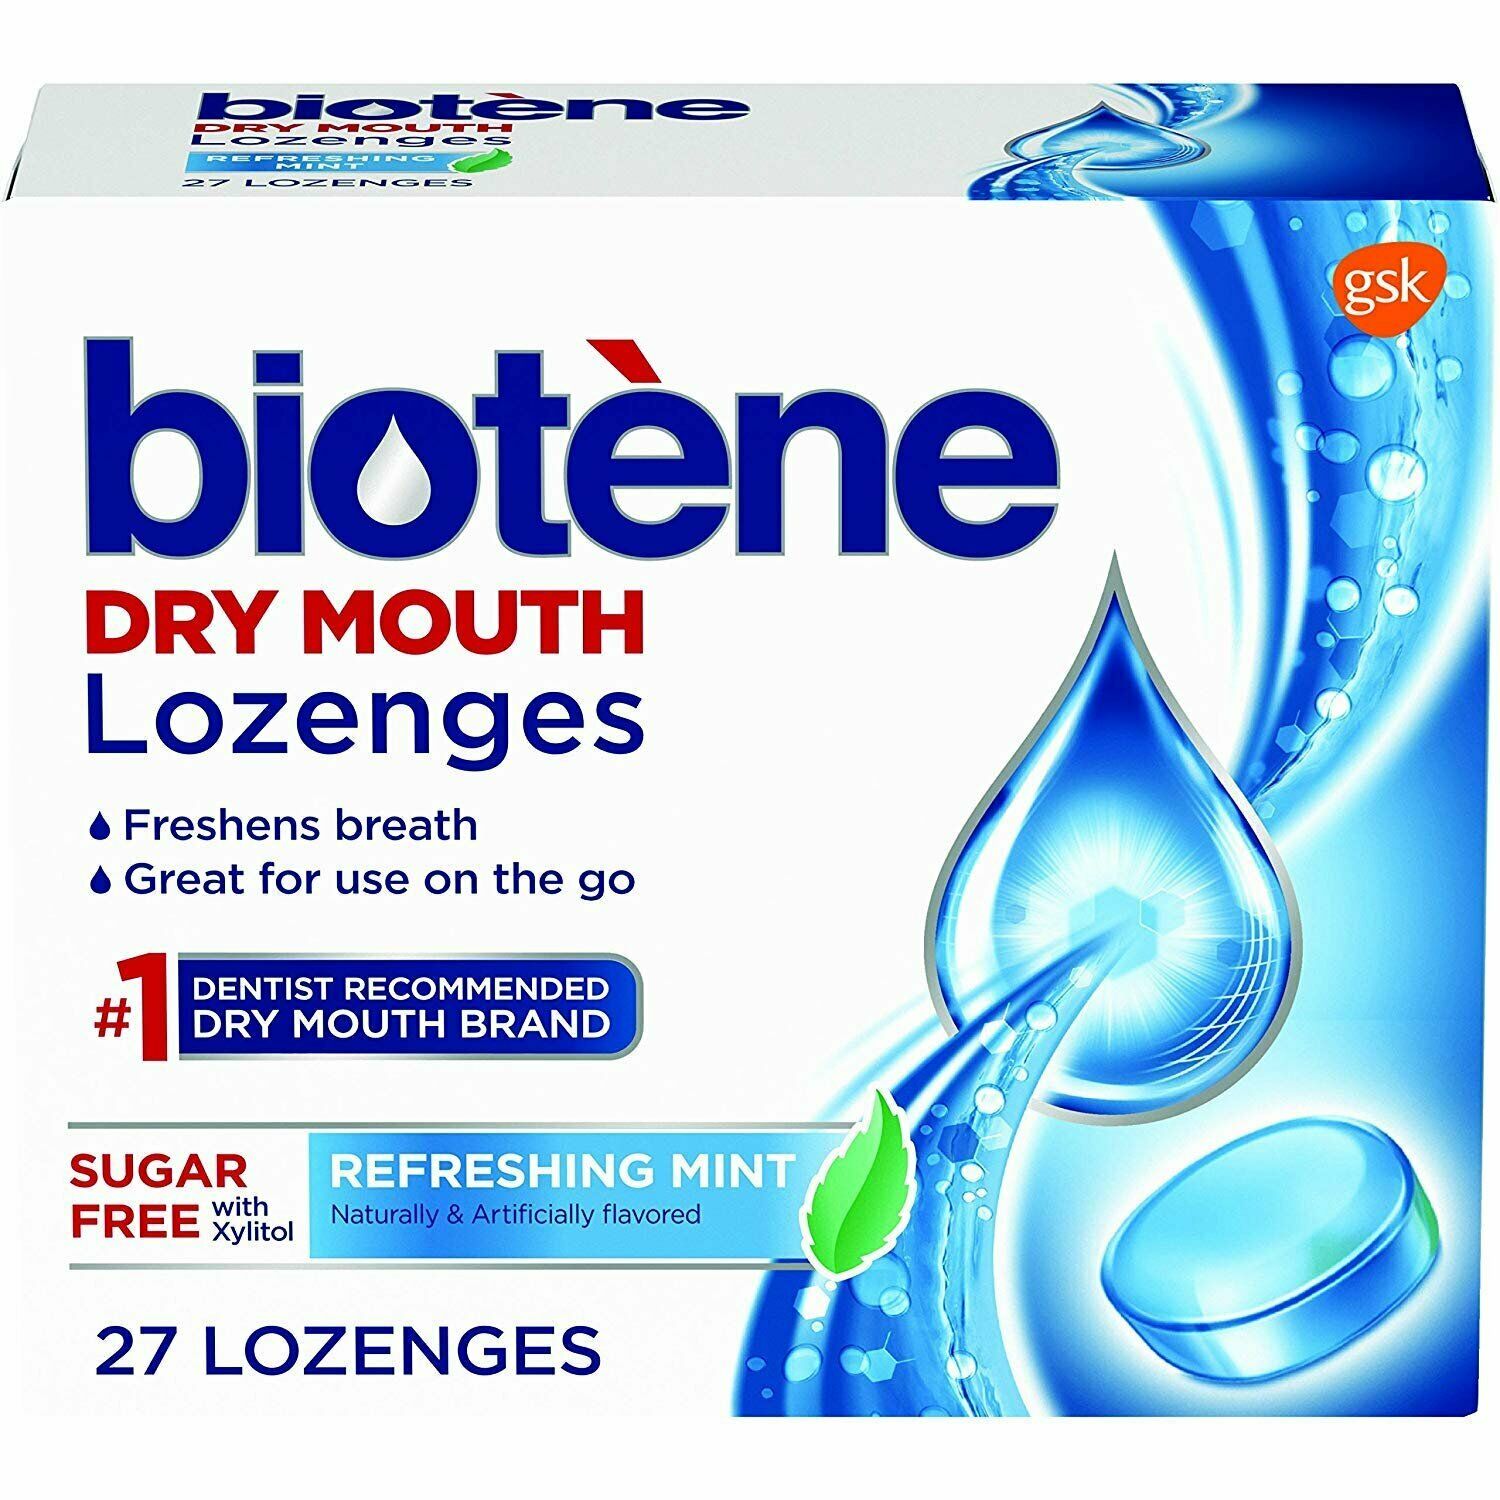 Biotene Dry Mouth Lozenges - Refreshing Mint | 27 Ct | 10 Pack